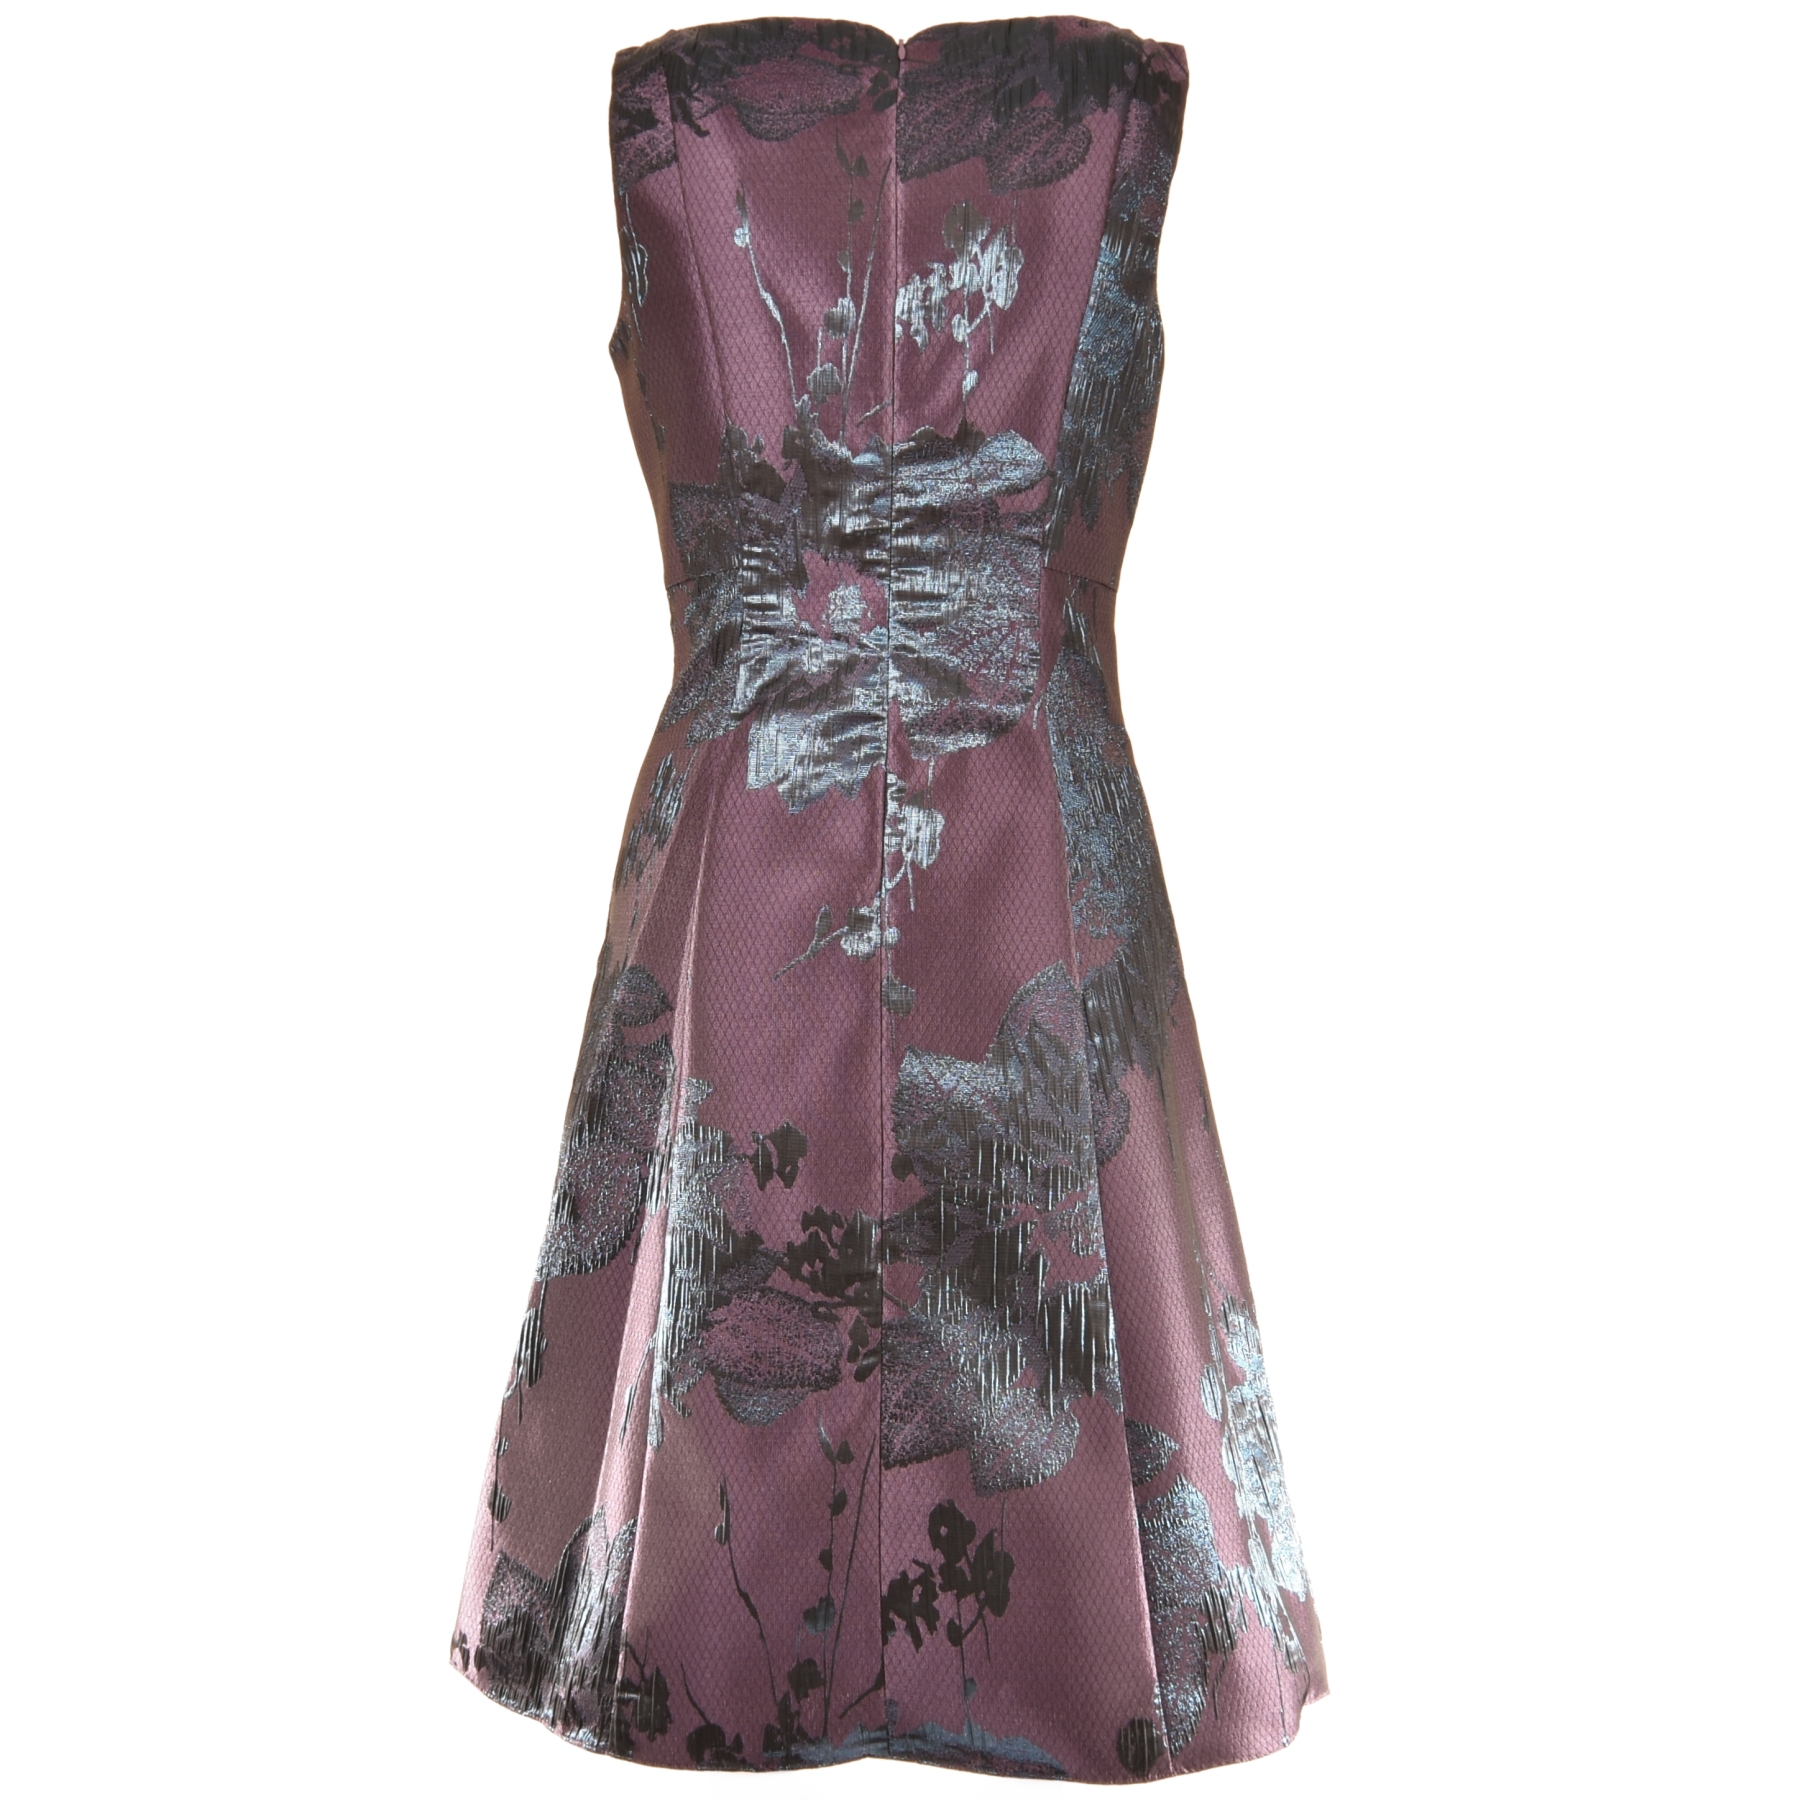 Metallic Purple Dress And Oscar Fashion Review